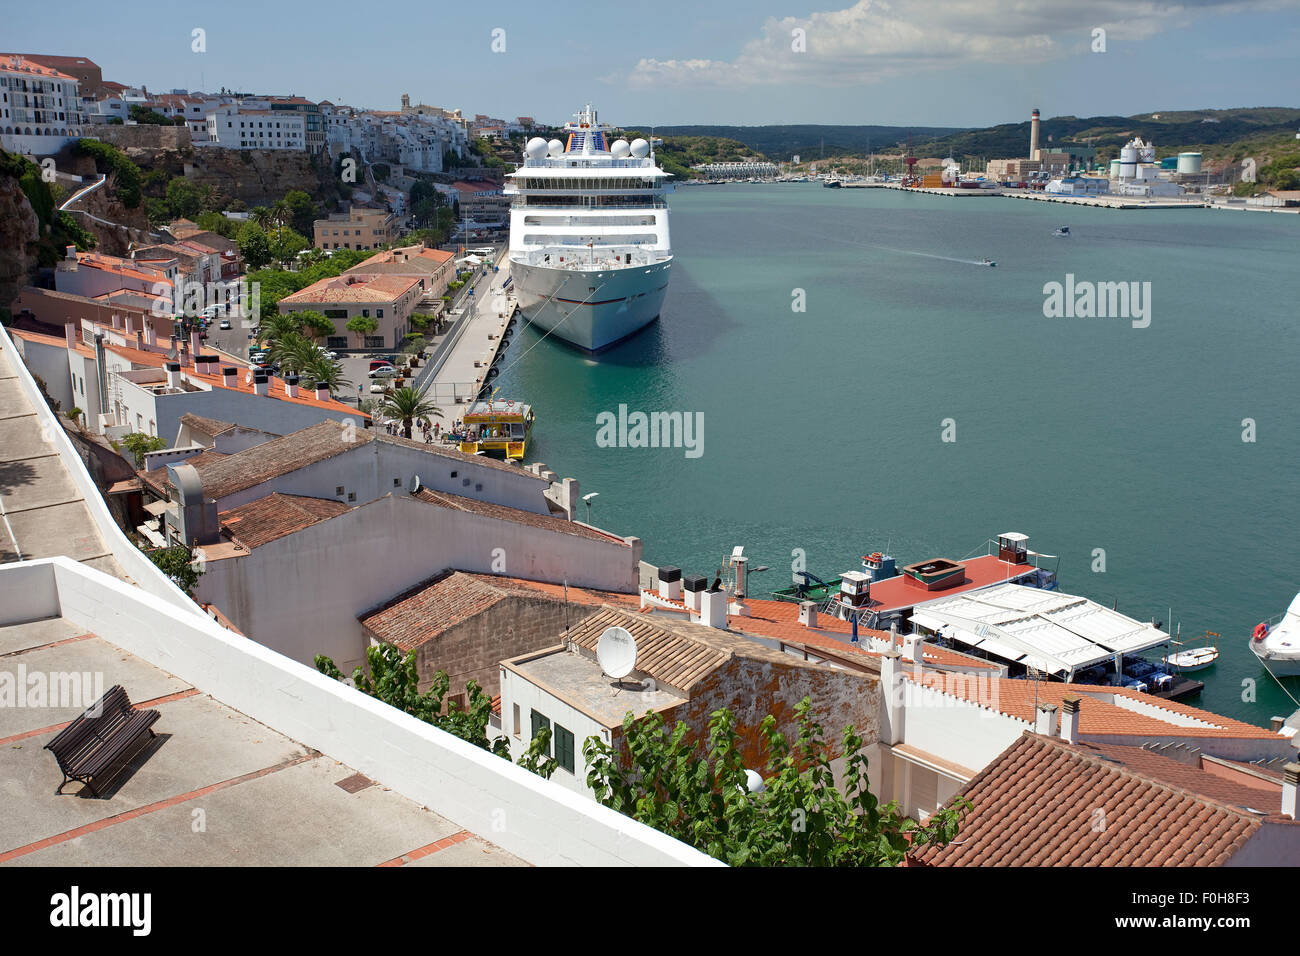 Europa 2 cruise ship in Mahon port Stock Photo